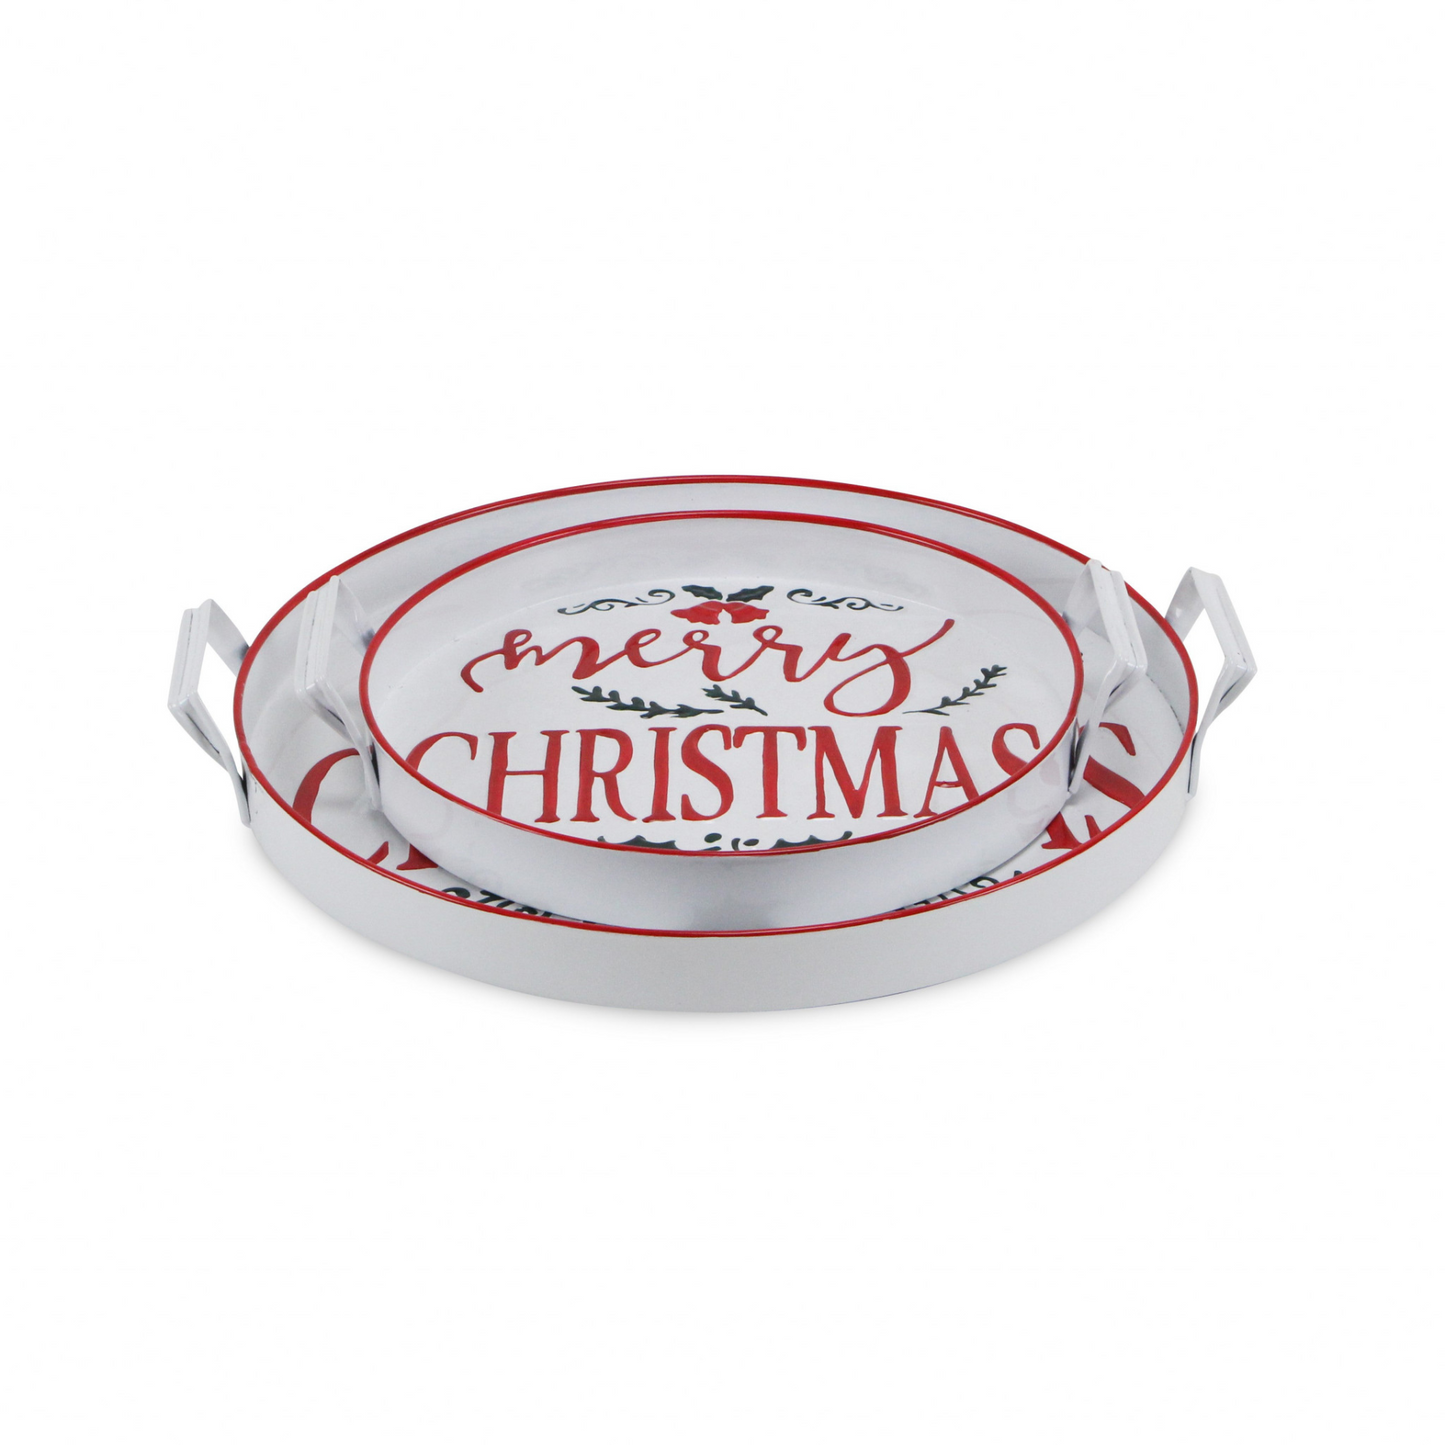 18" White Round Metal Christmas Handmade Tray With Handles